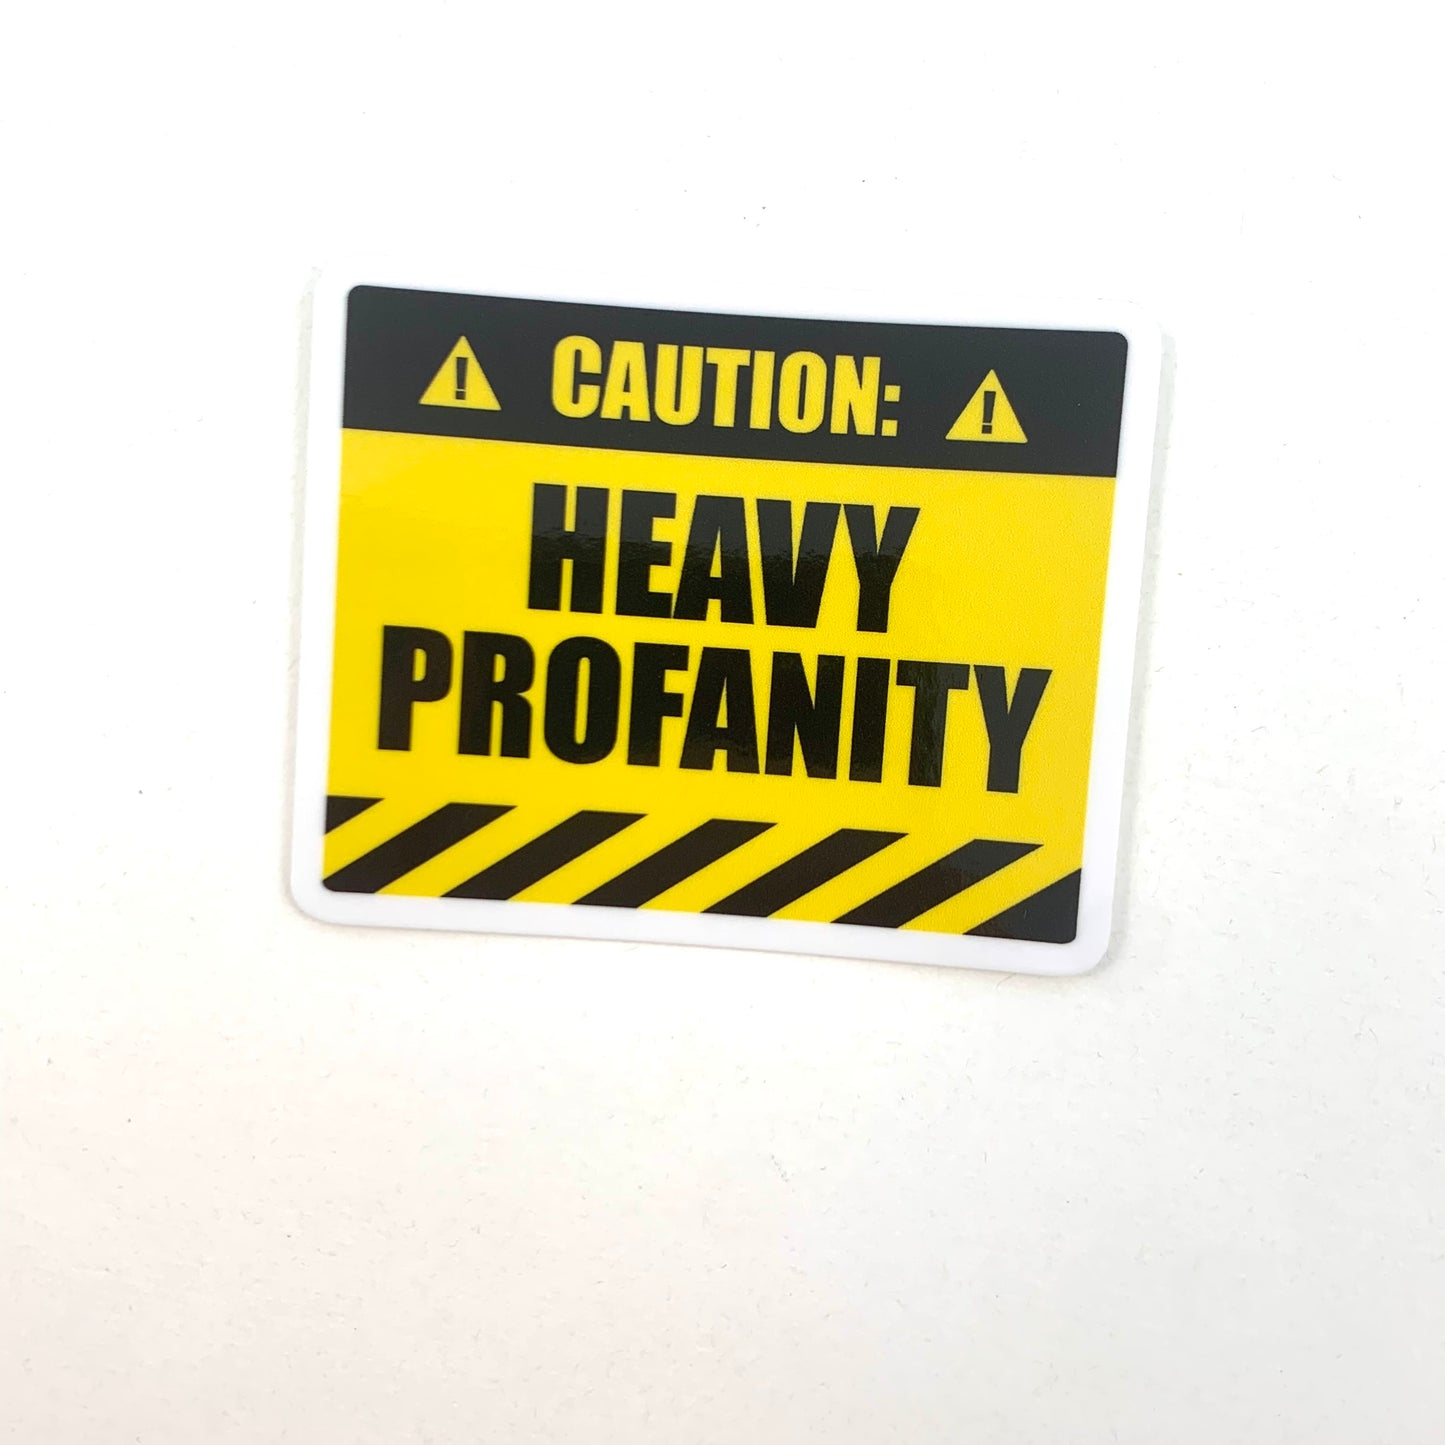 Caution: Heavy Profanity vinyl sticker